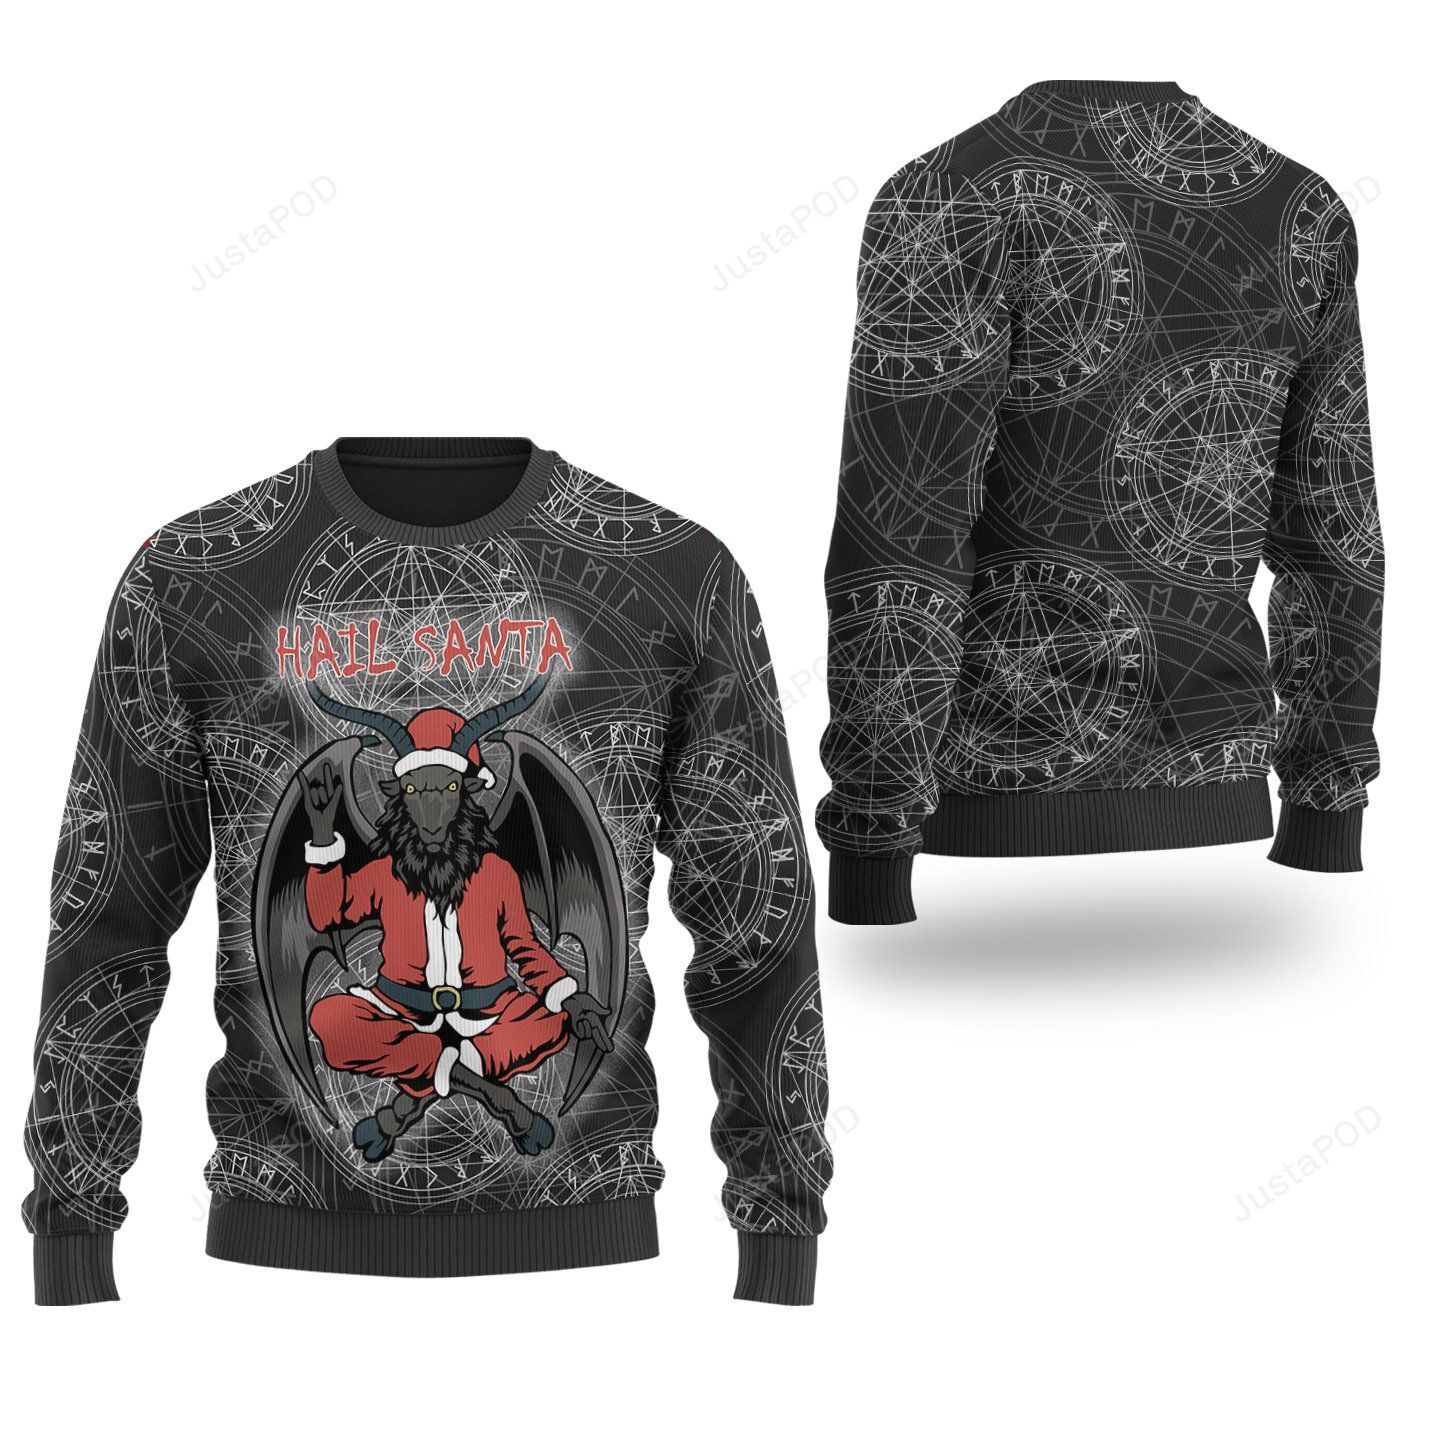 Satanic pentagram hail santa ugly christmas sweater all over print sweatshirt  ugly sweater